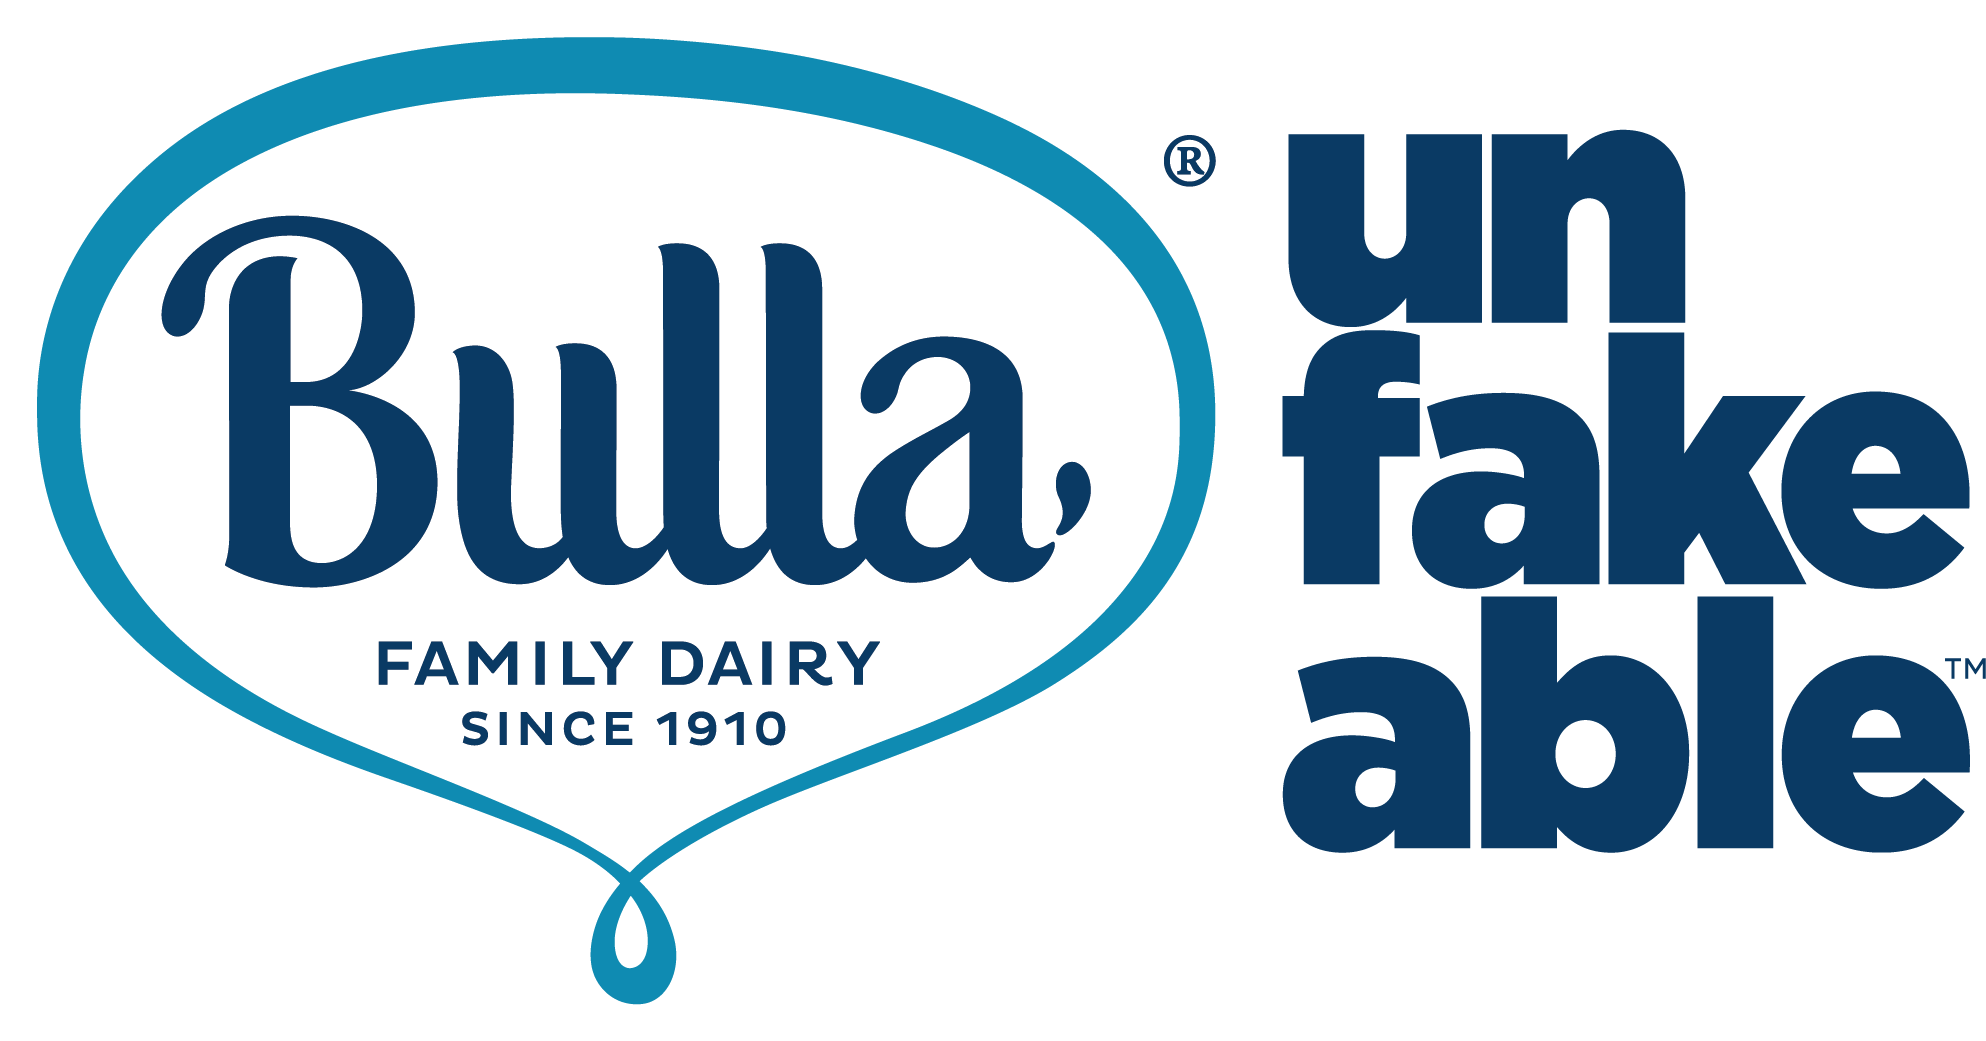 Dairy Classic логотип. Дейри. Dairy Spring лого. Bulla надпись.